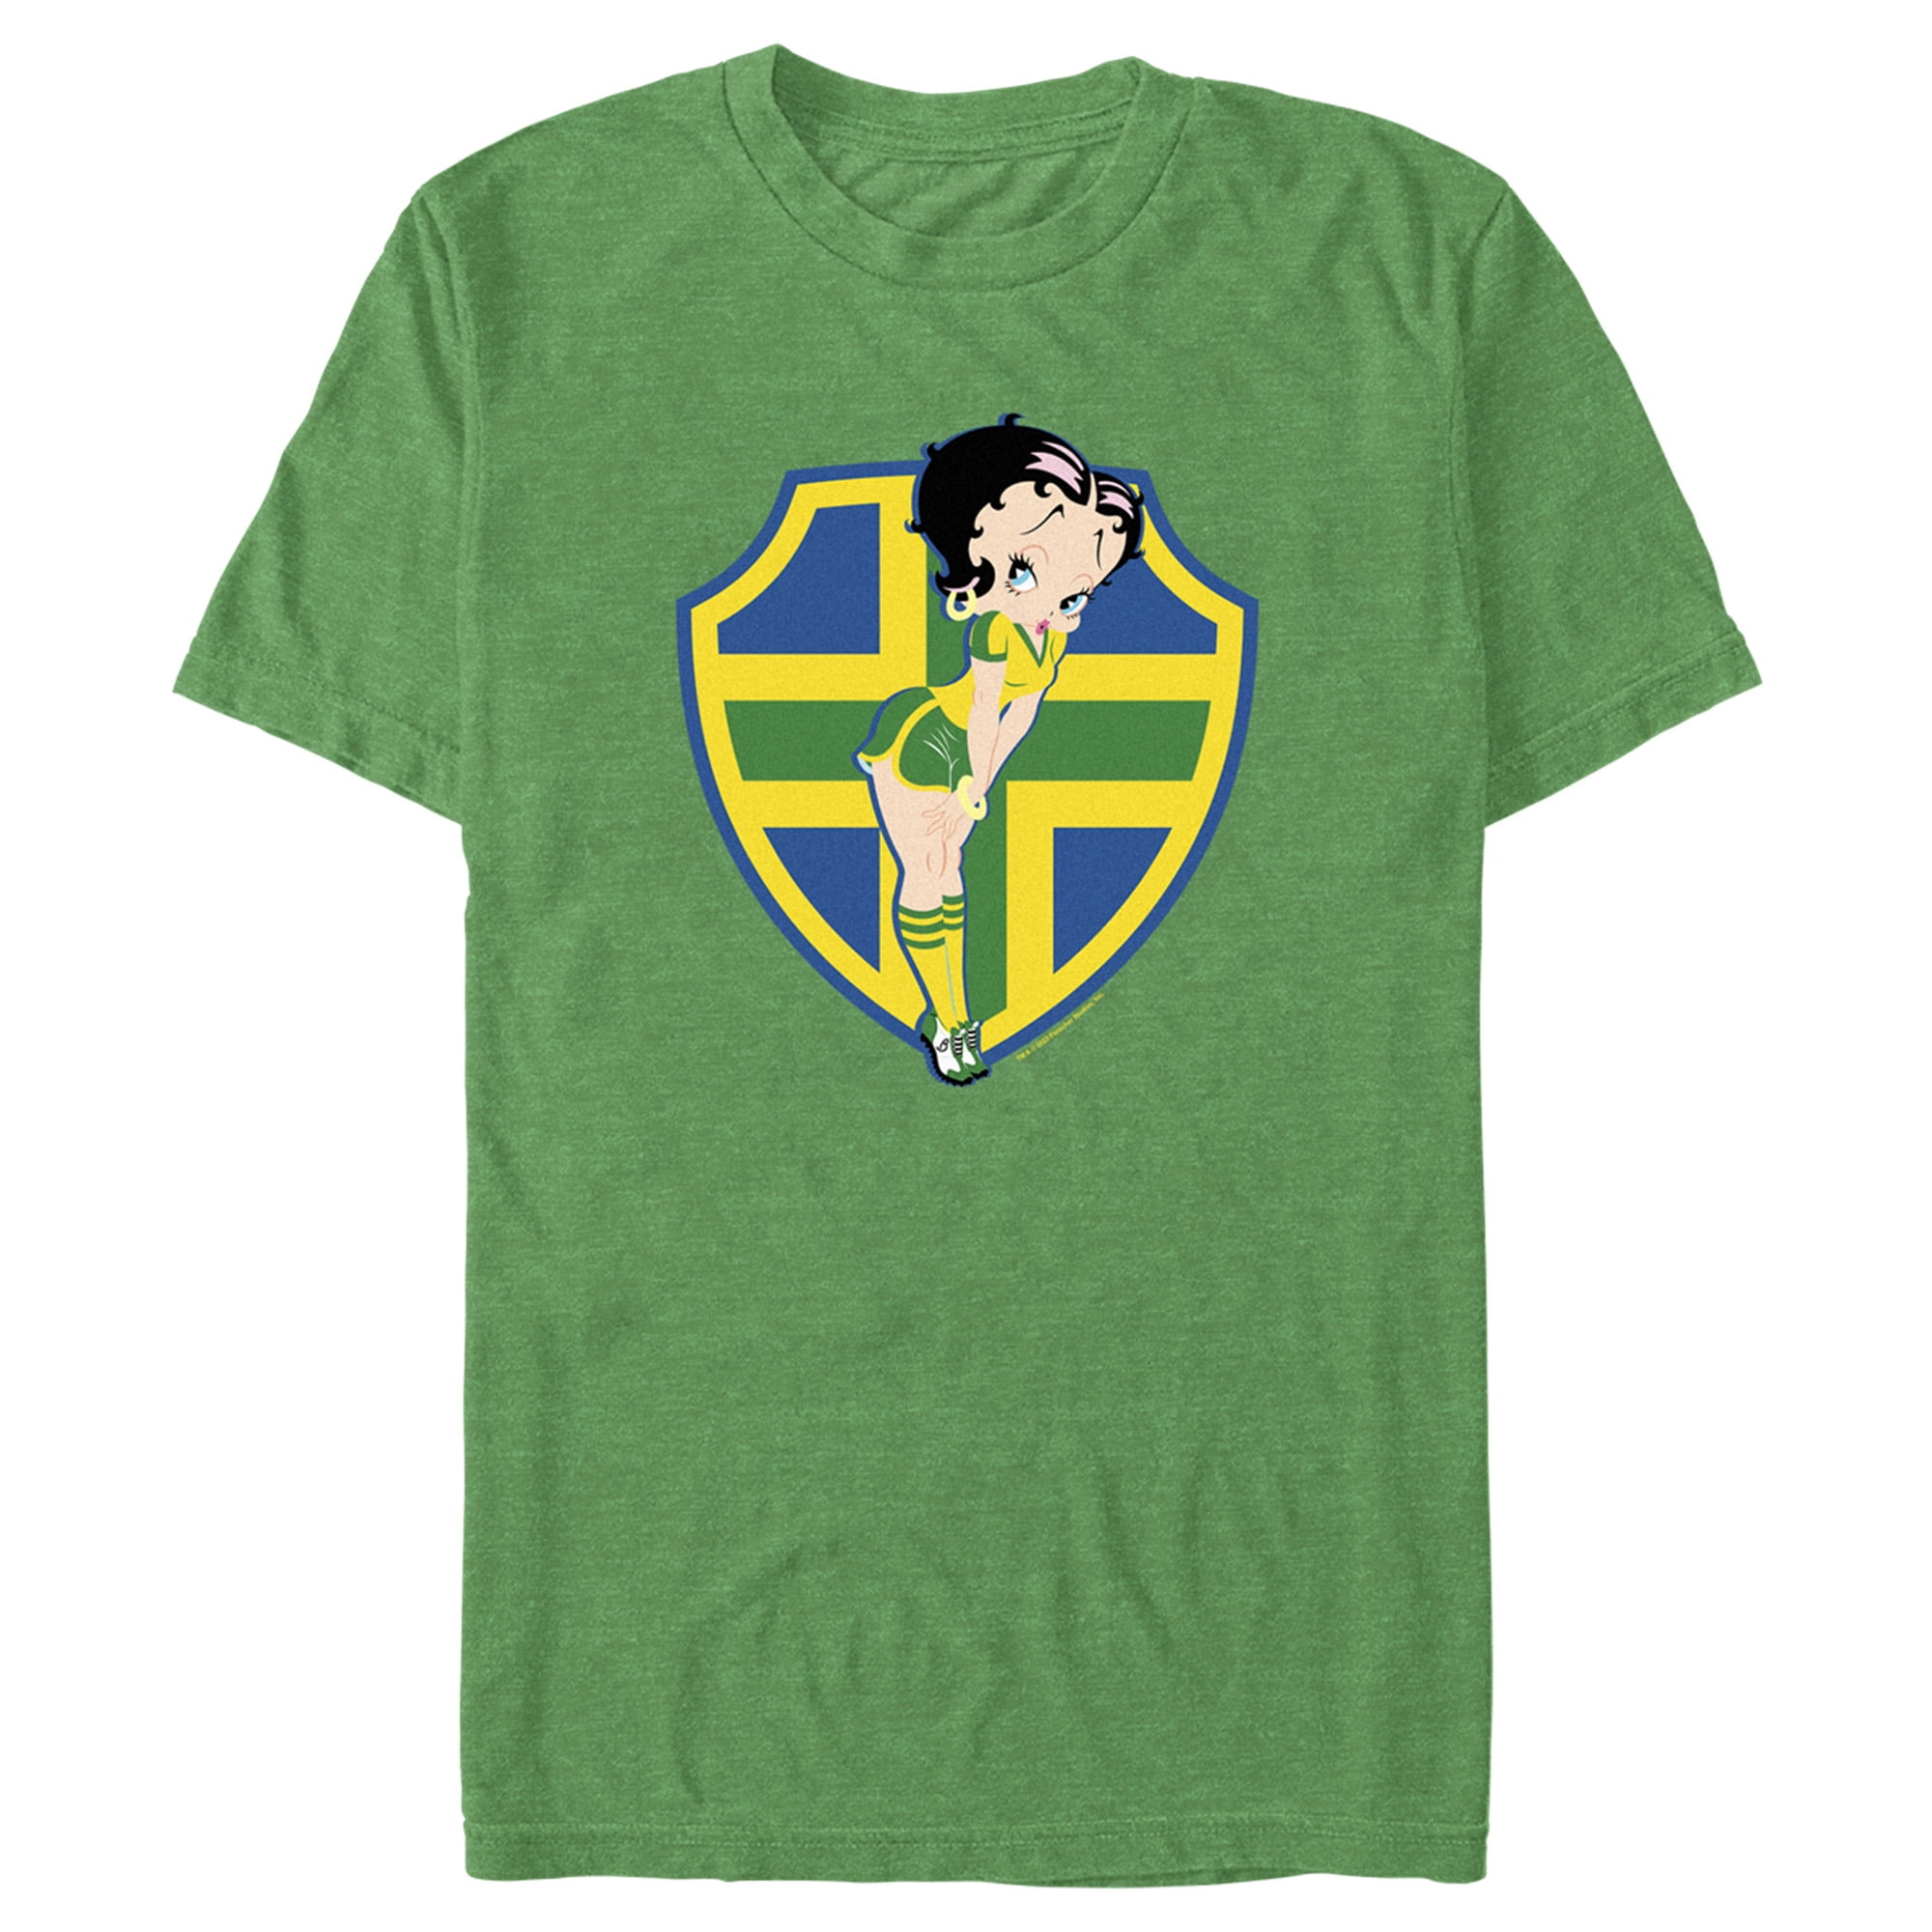 Brazil Men's Graphic T-Shirt.